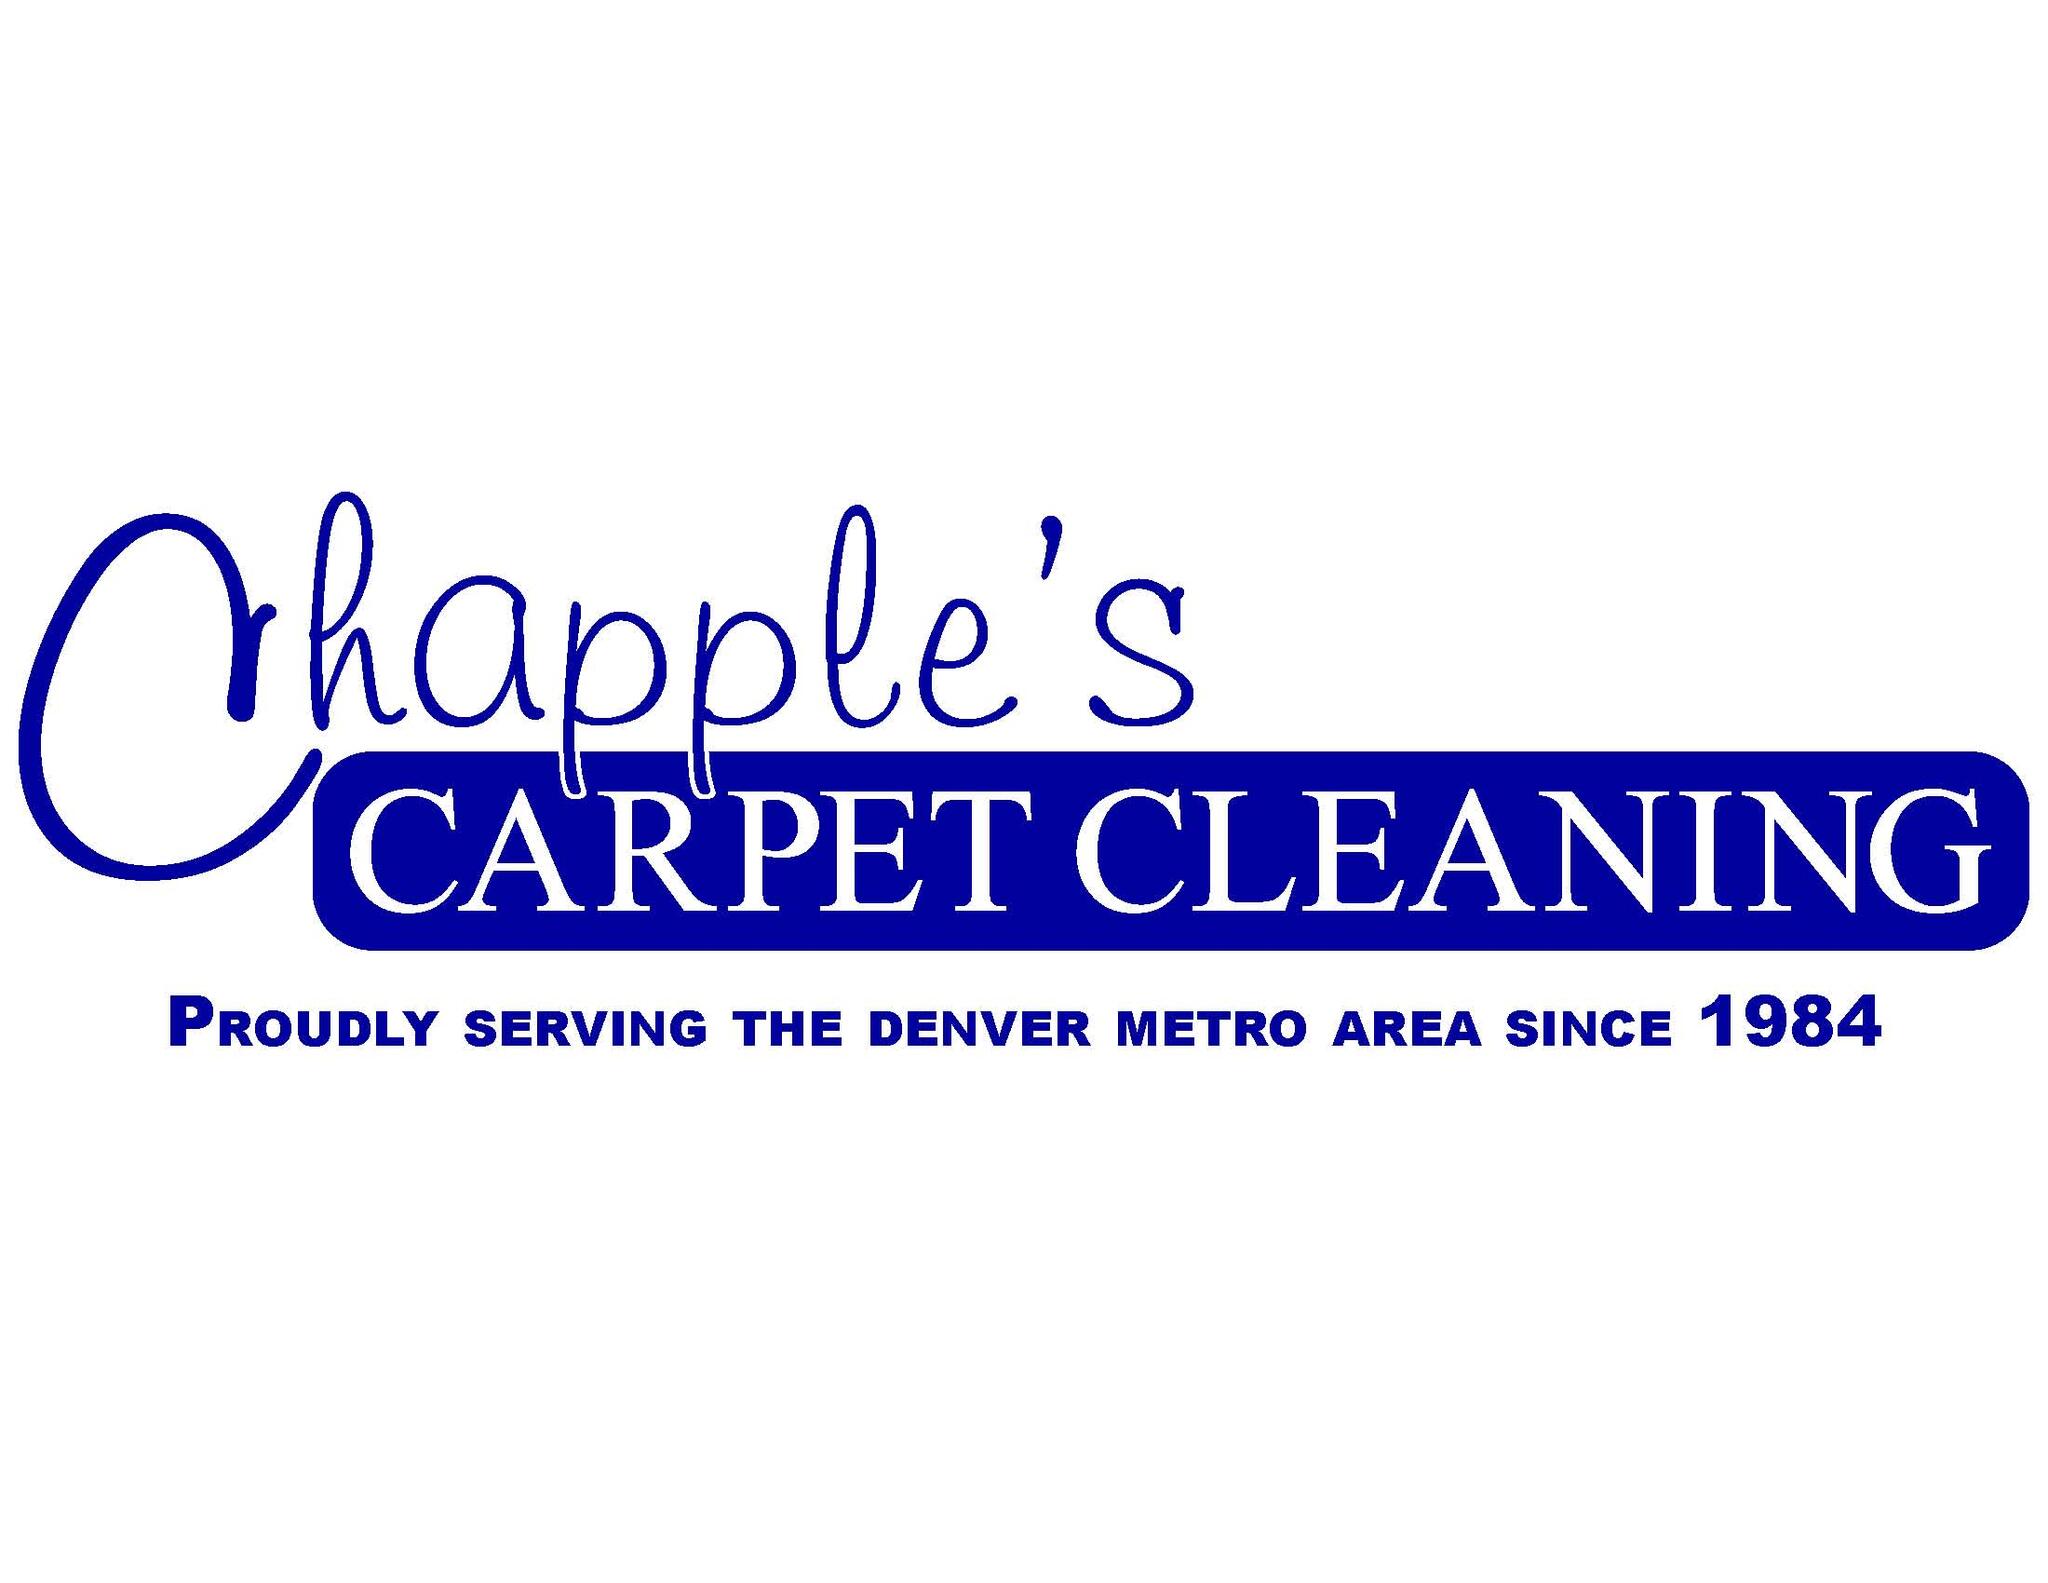 Chapple's Carpet Cleaning - Aurora, CO - Nextdoor